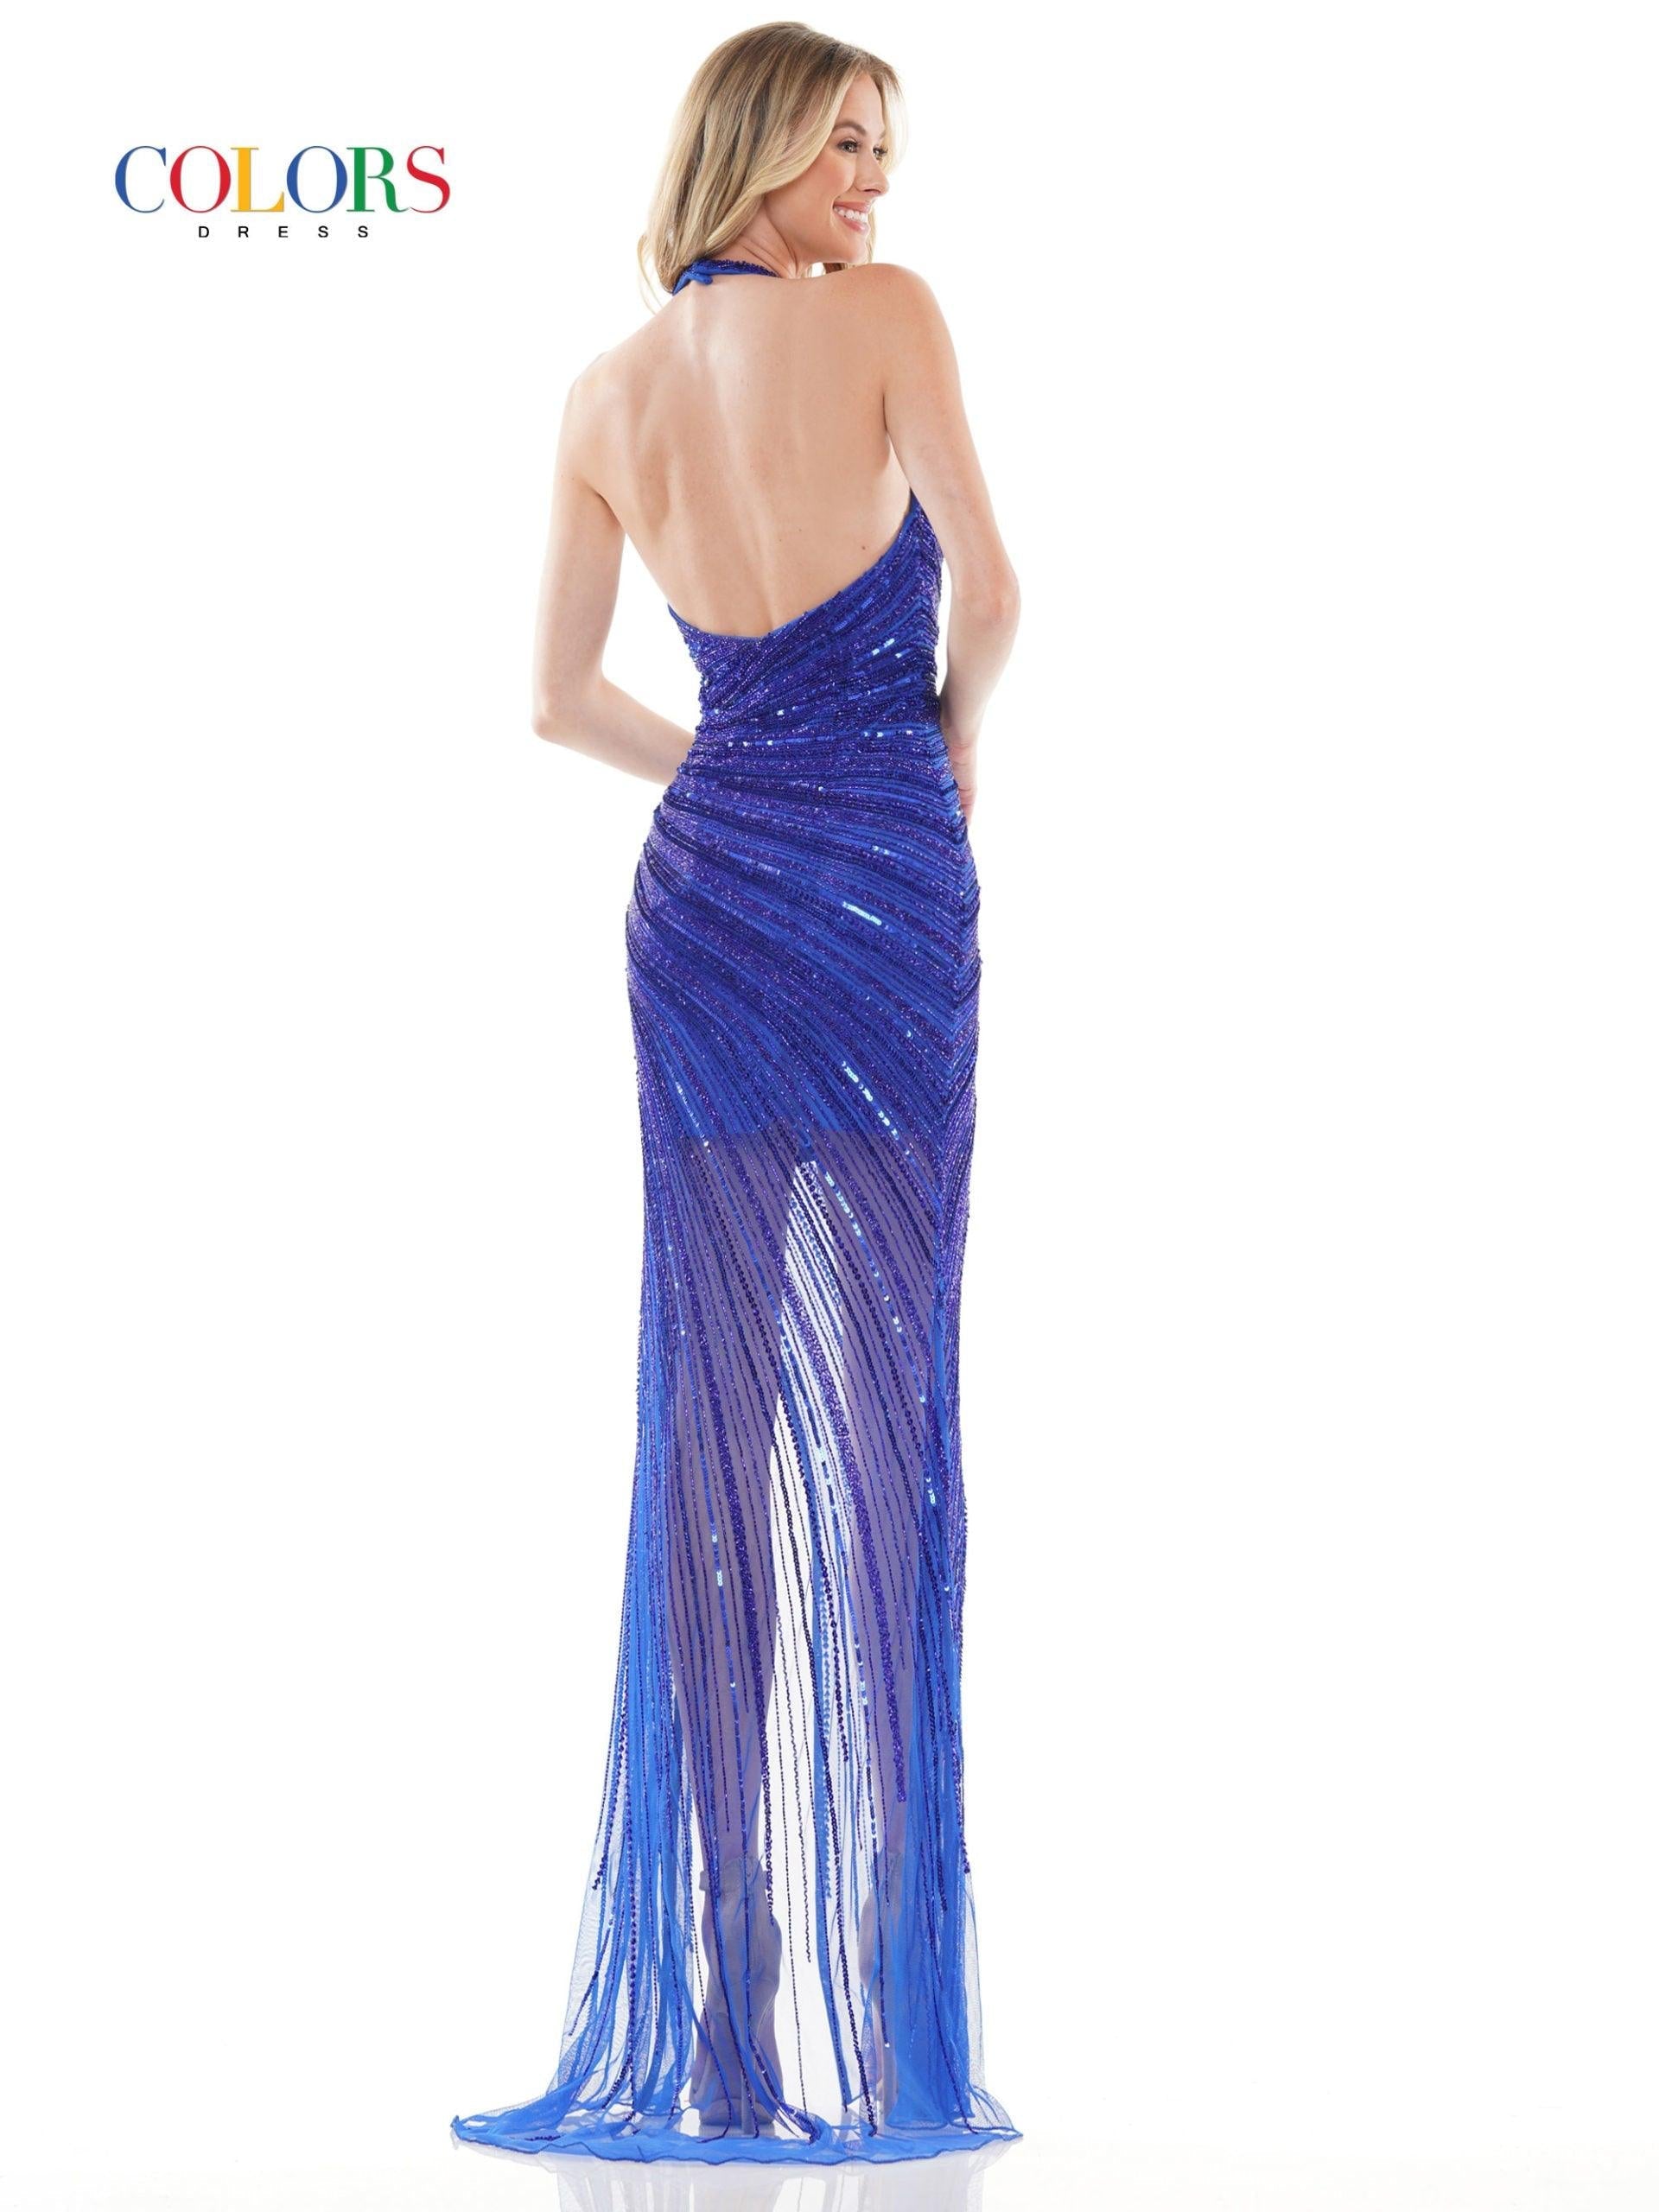 Colors Long Formal Halter Prom Dress 125 - The Dress Outlet